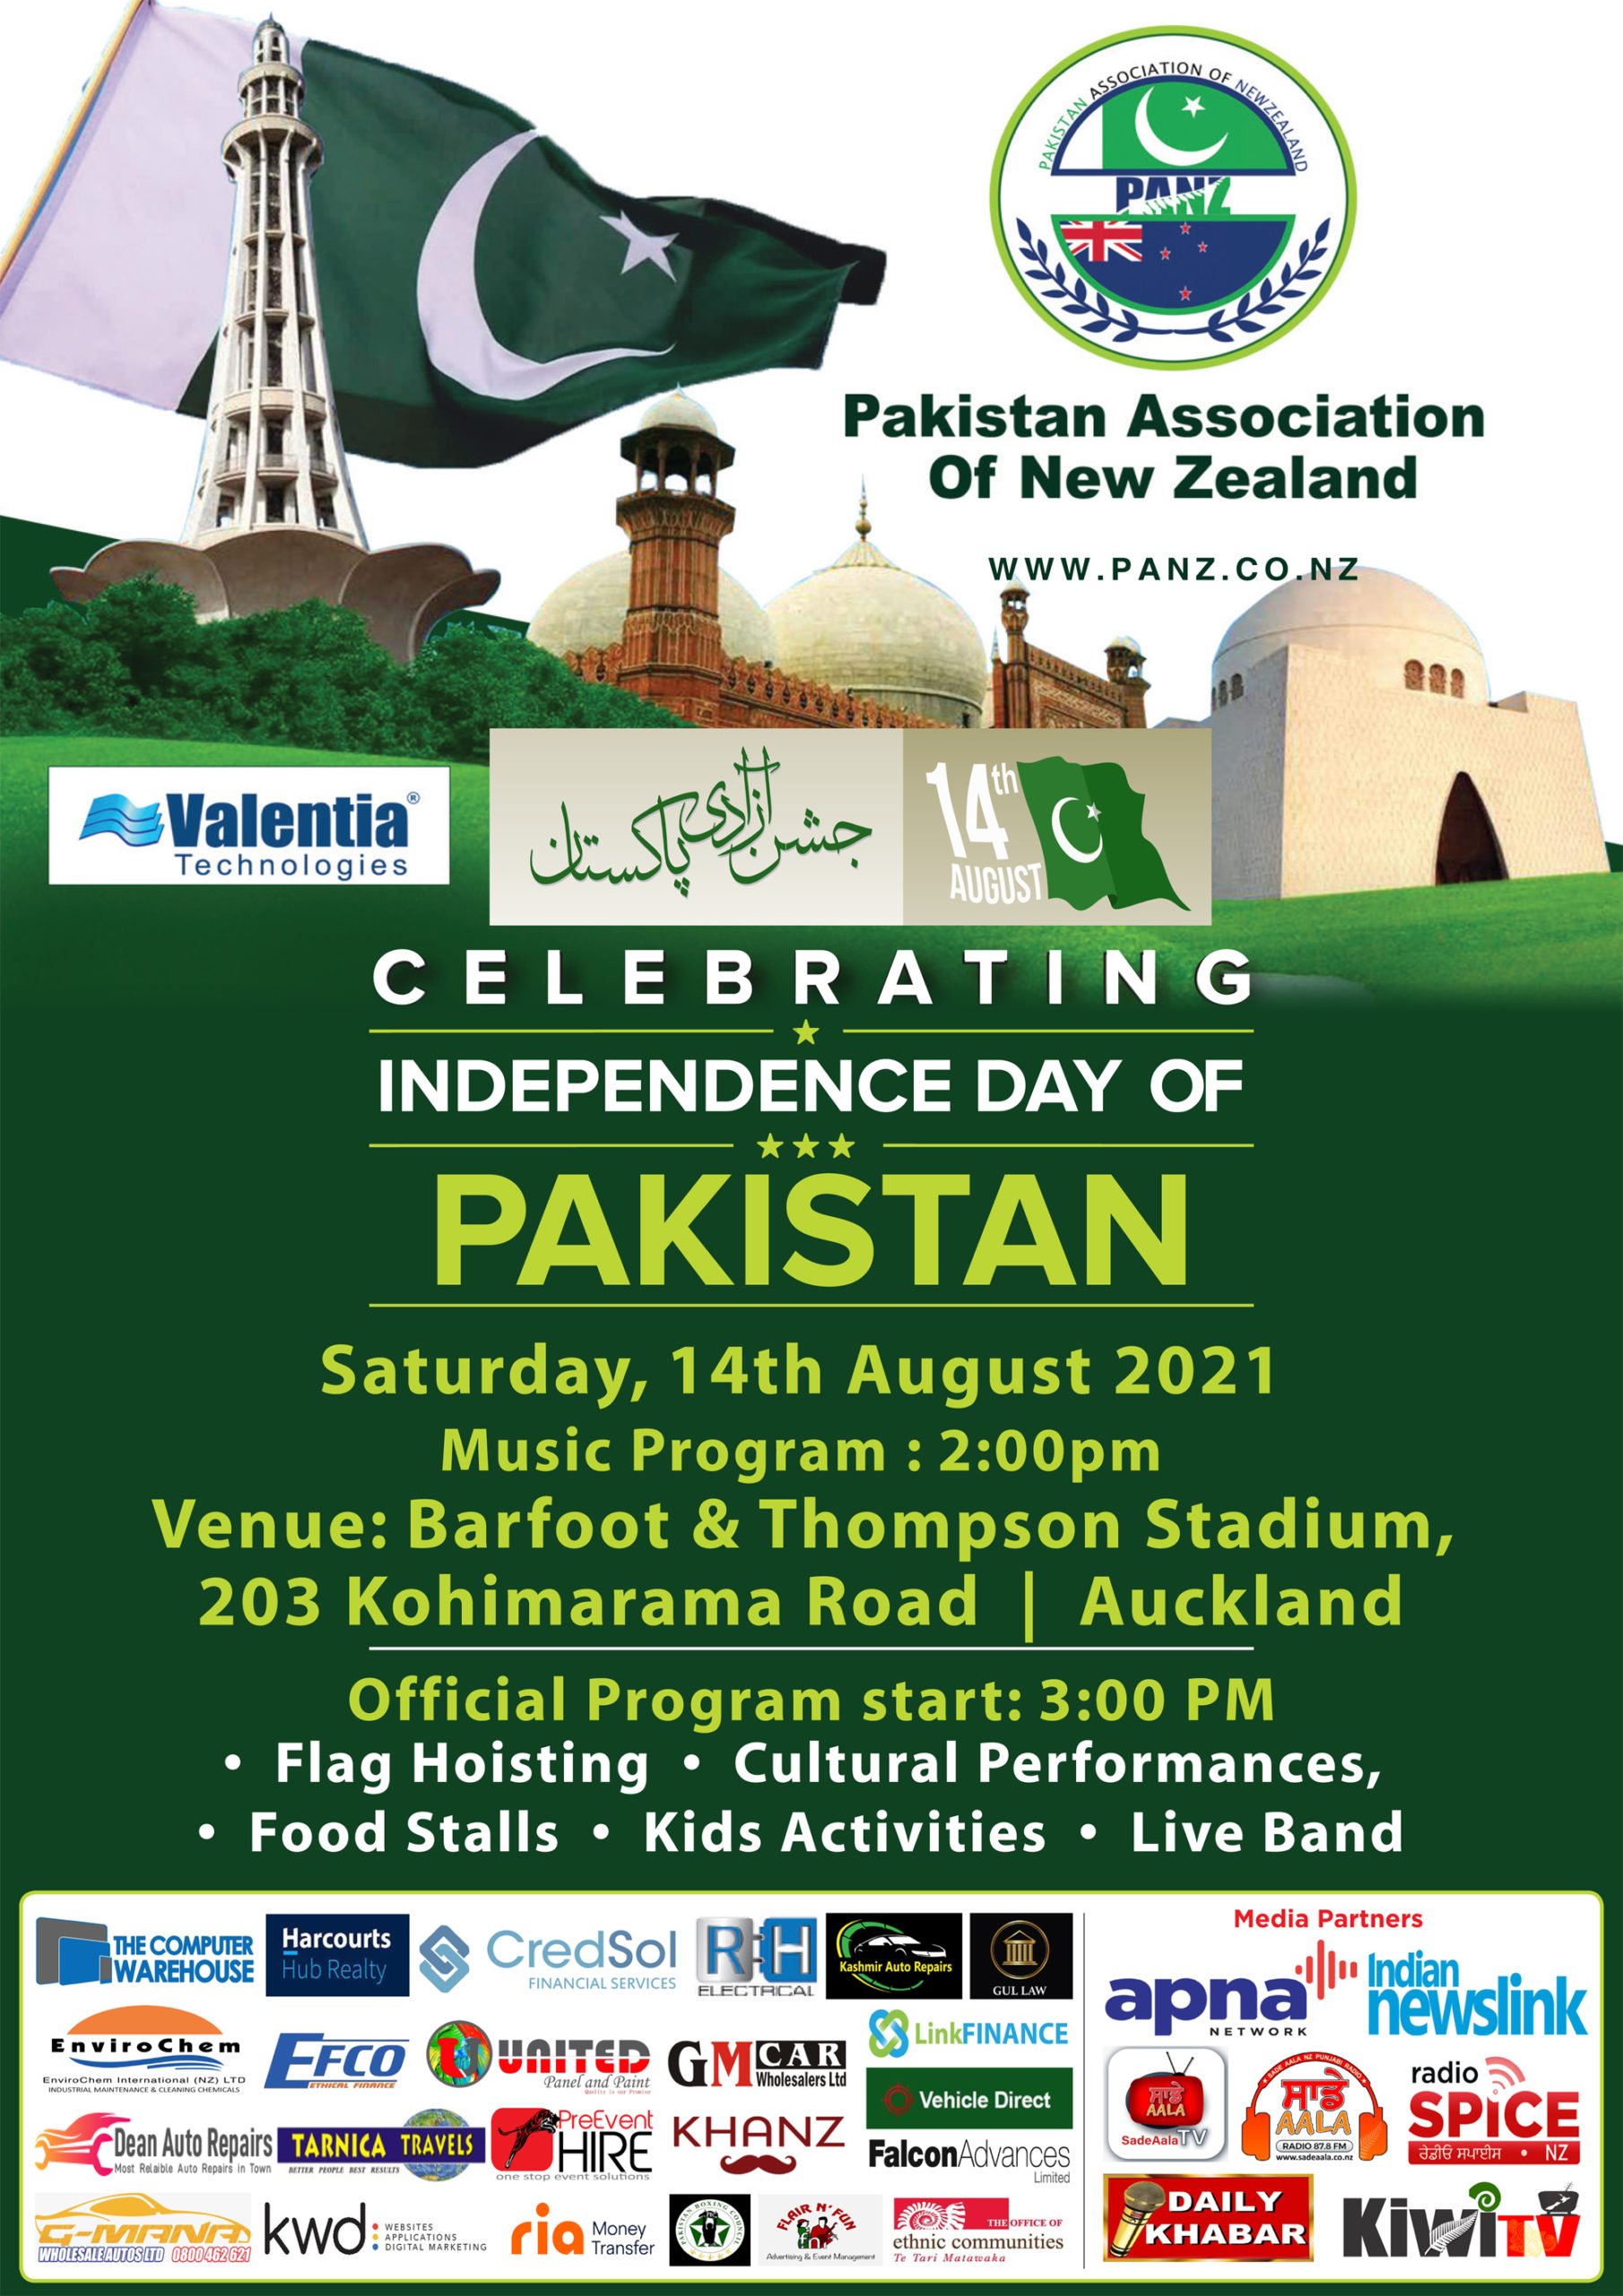 Pakistan Association of New Zealand